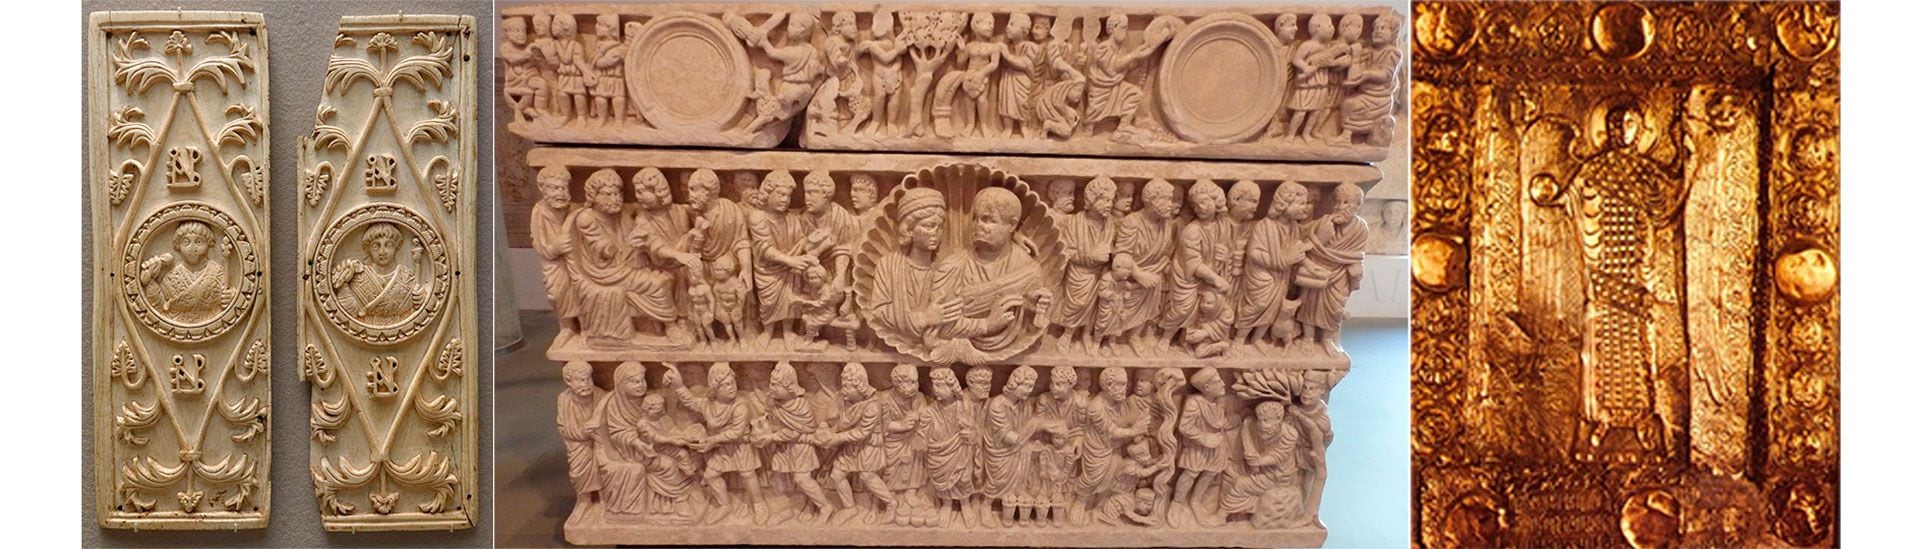 De izquierda a derecha: díptico consular, sarcófago paleocristiano e ícono bizantino